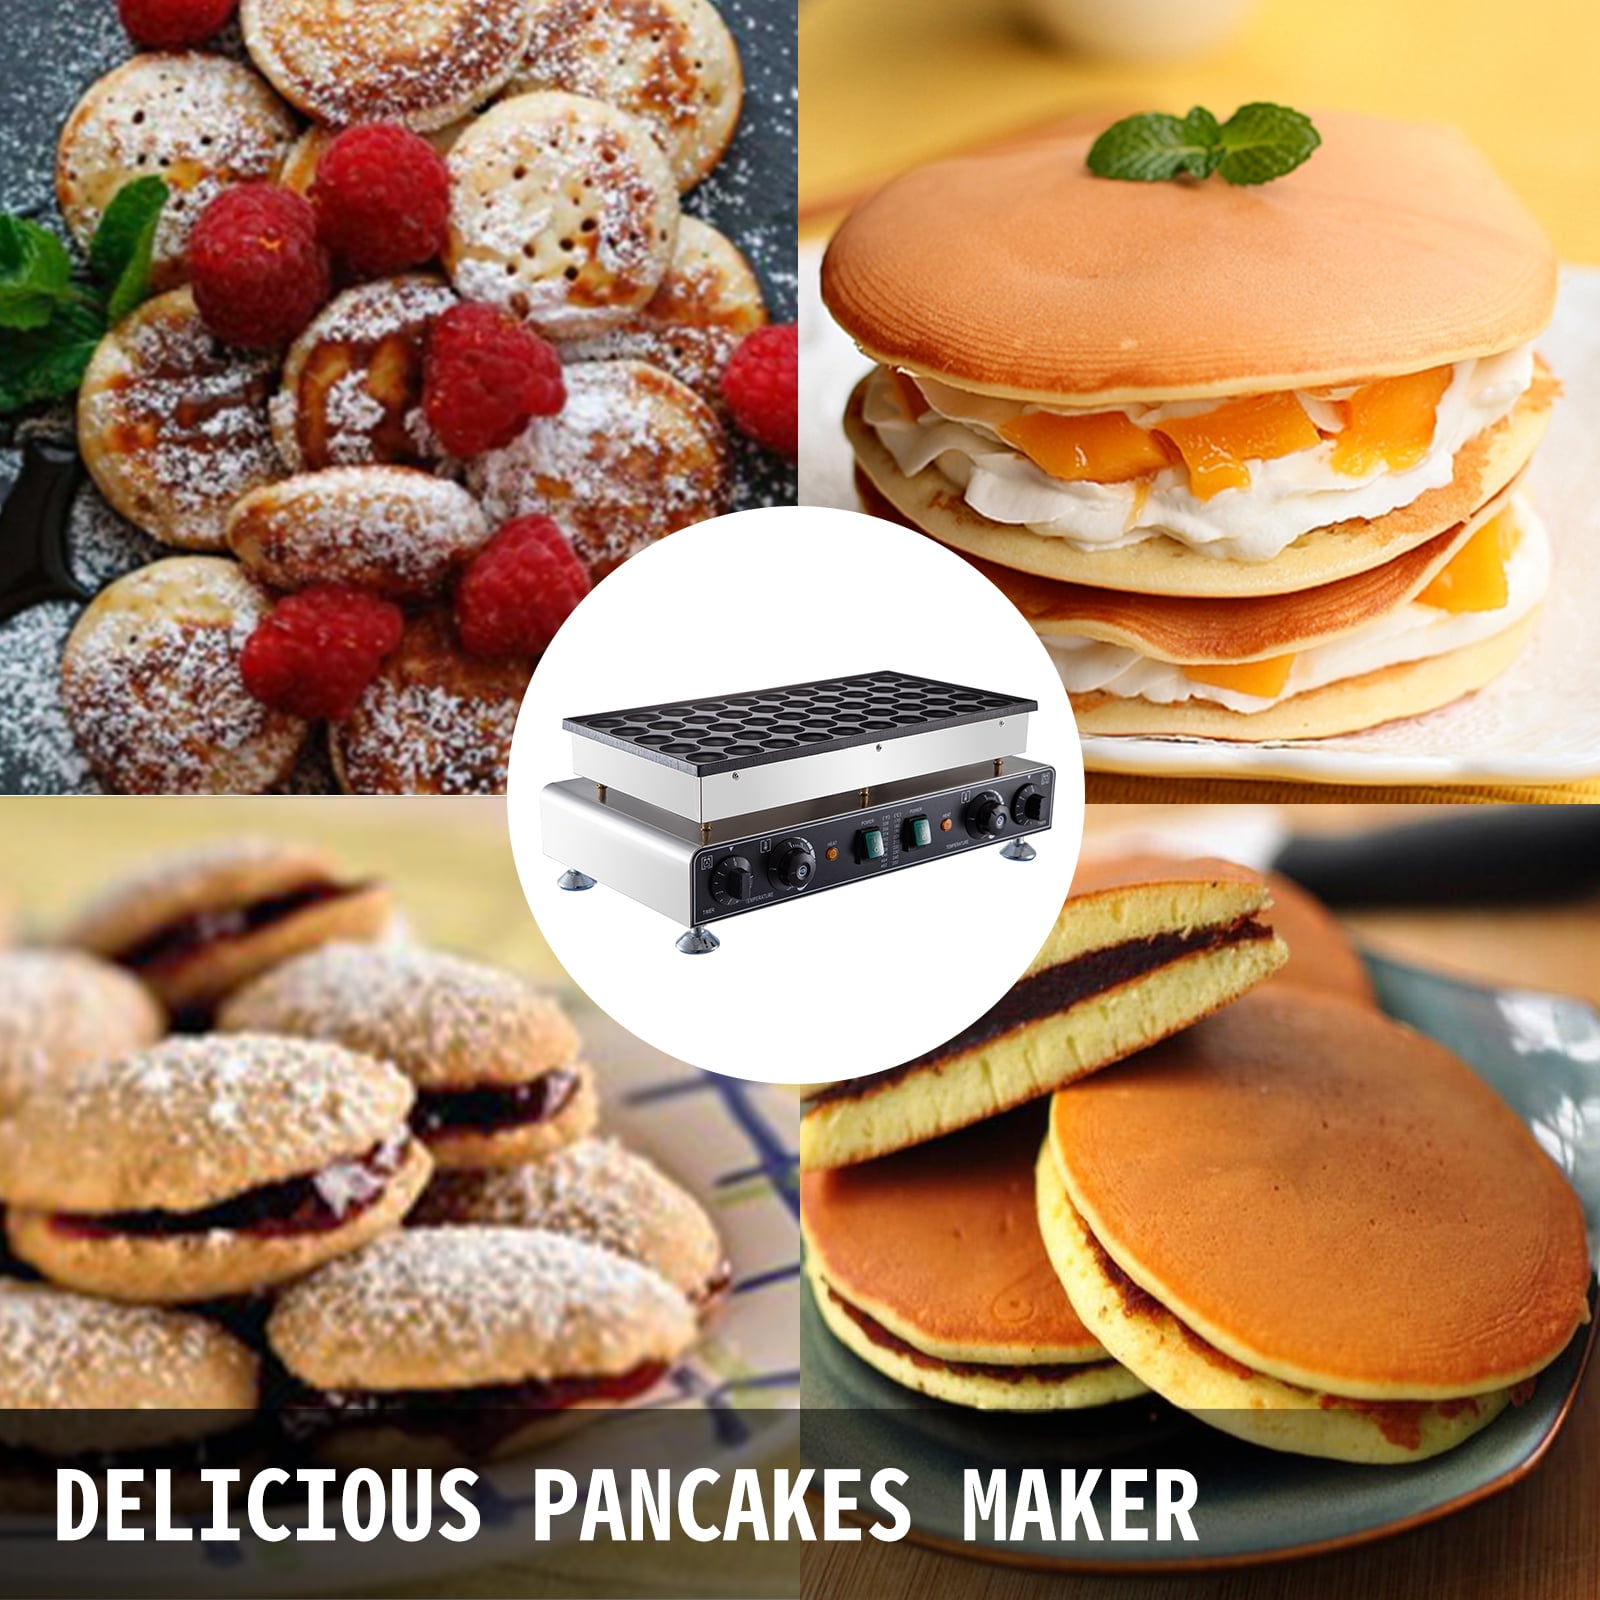 Mini Pancake Maker, 950w Electric Non-Stick Muffin Maker Machine For Bakery  And Kitchen Restaurant